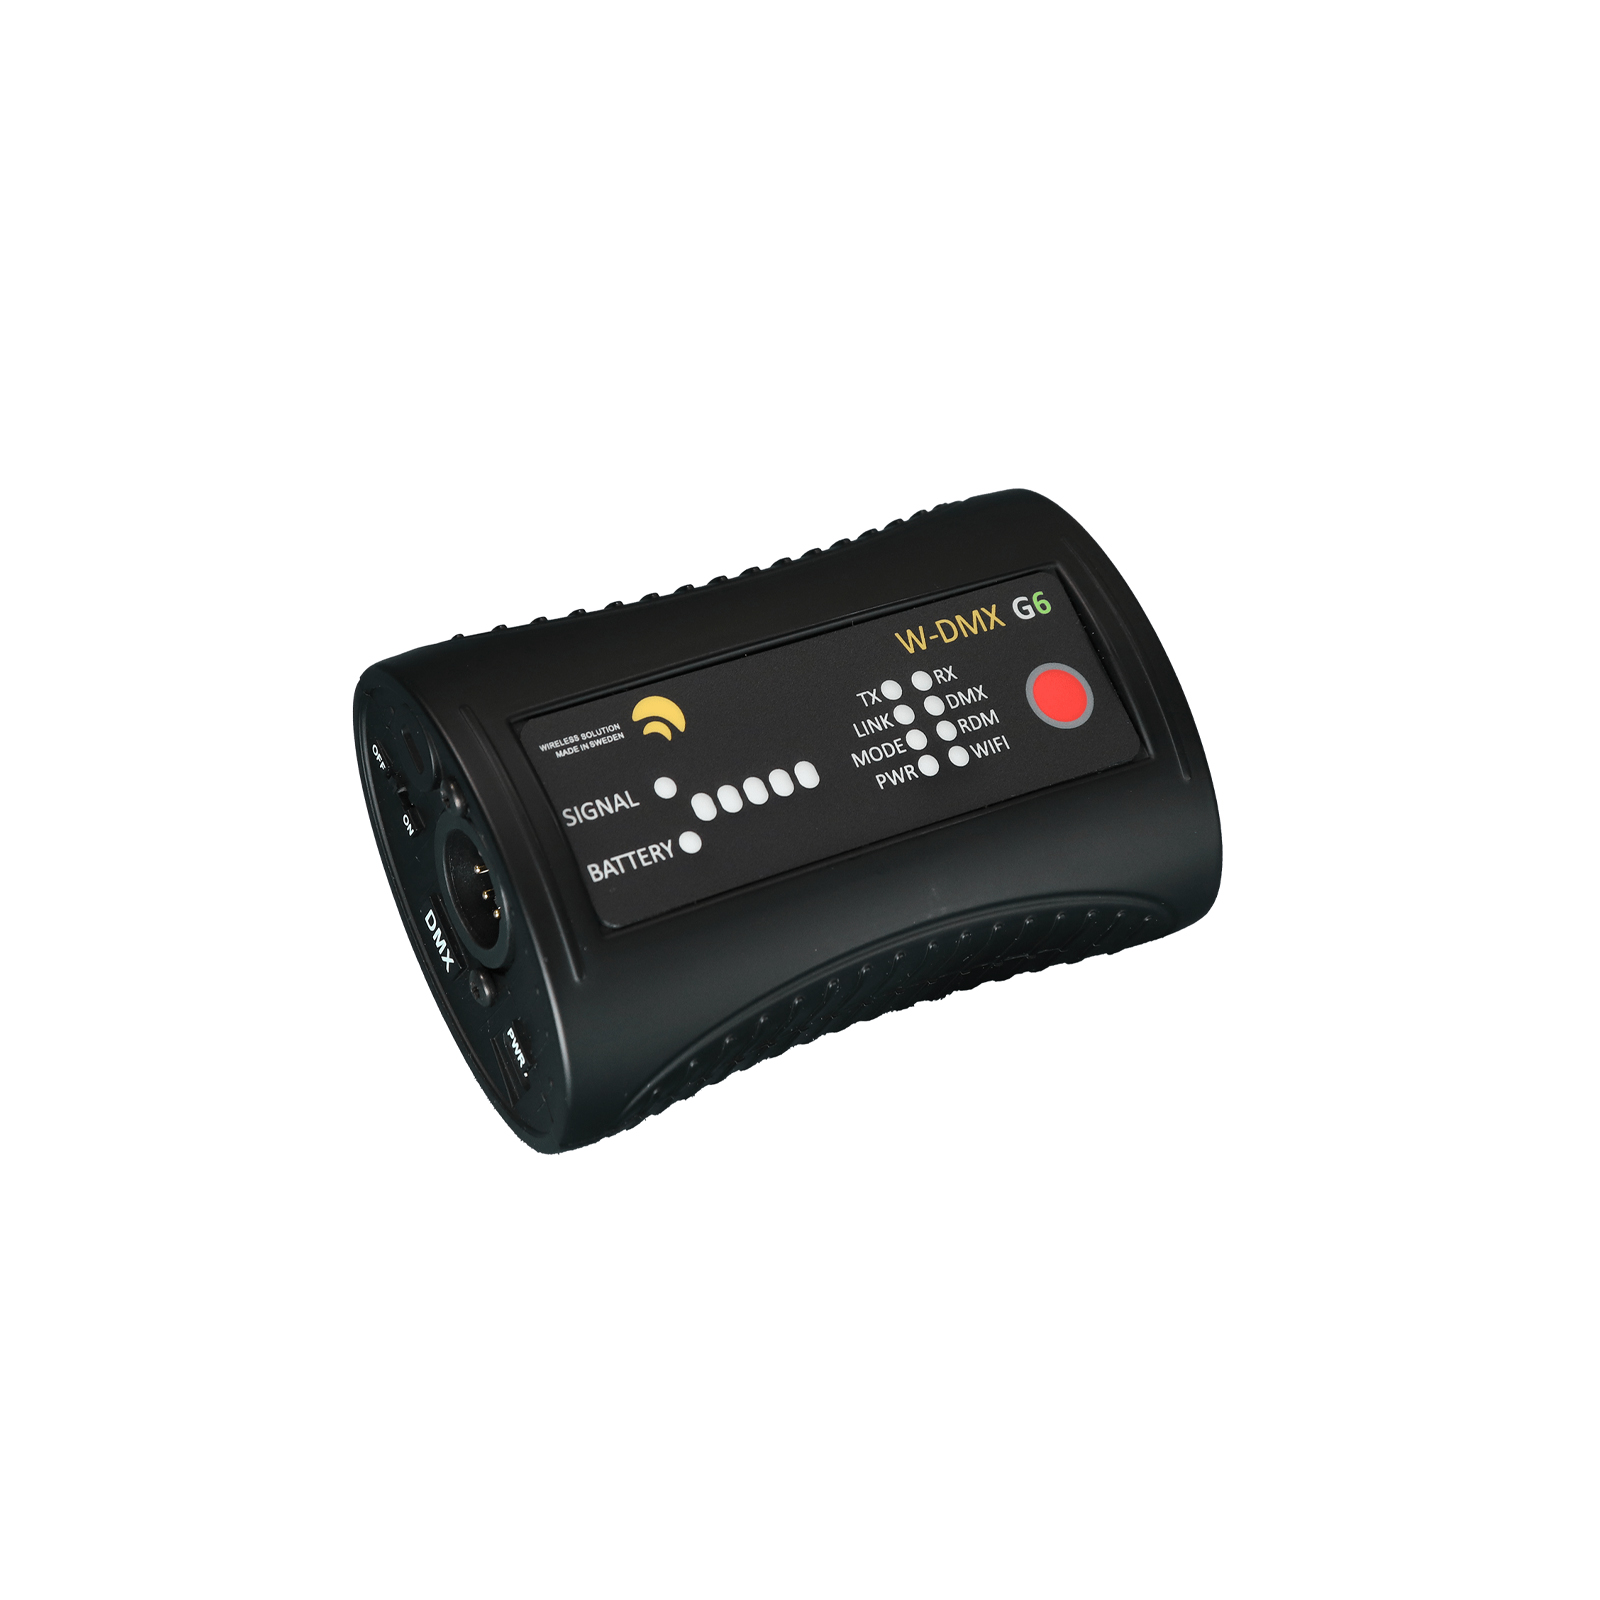 W-DMX Micro F-1 Lite G6 Transceiver